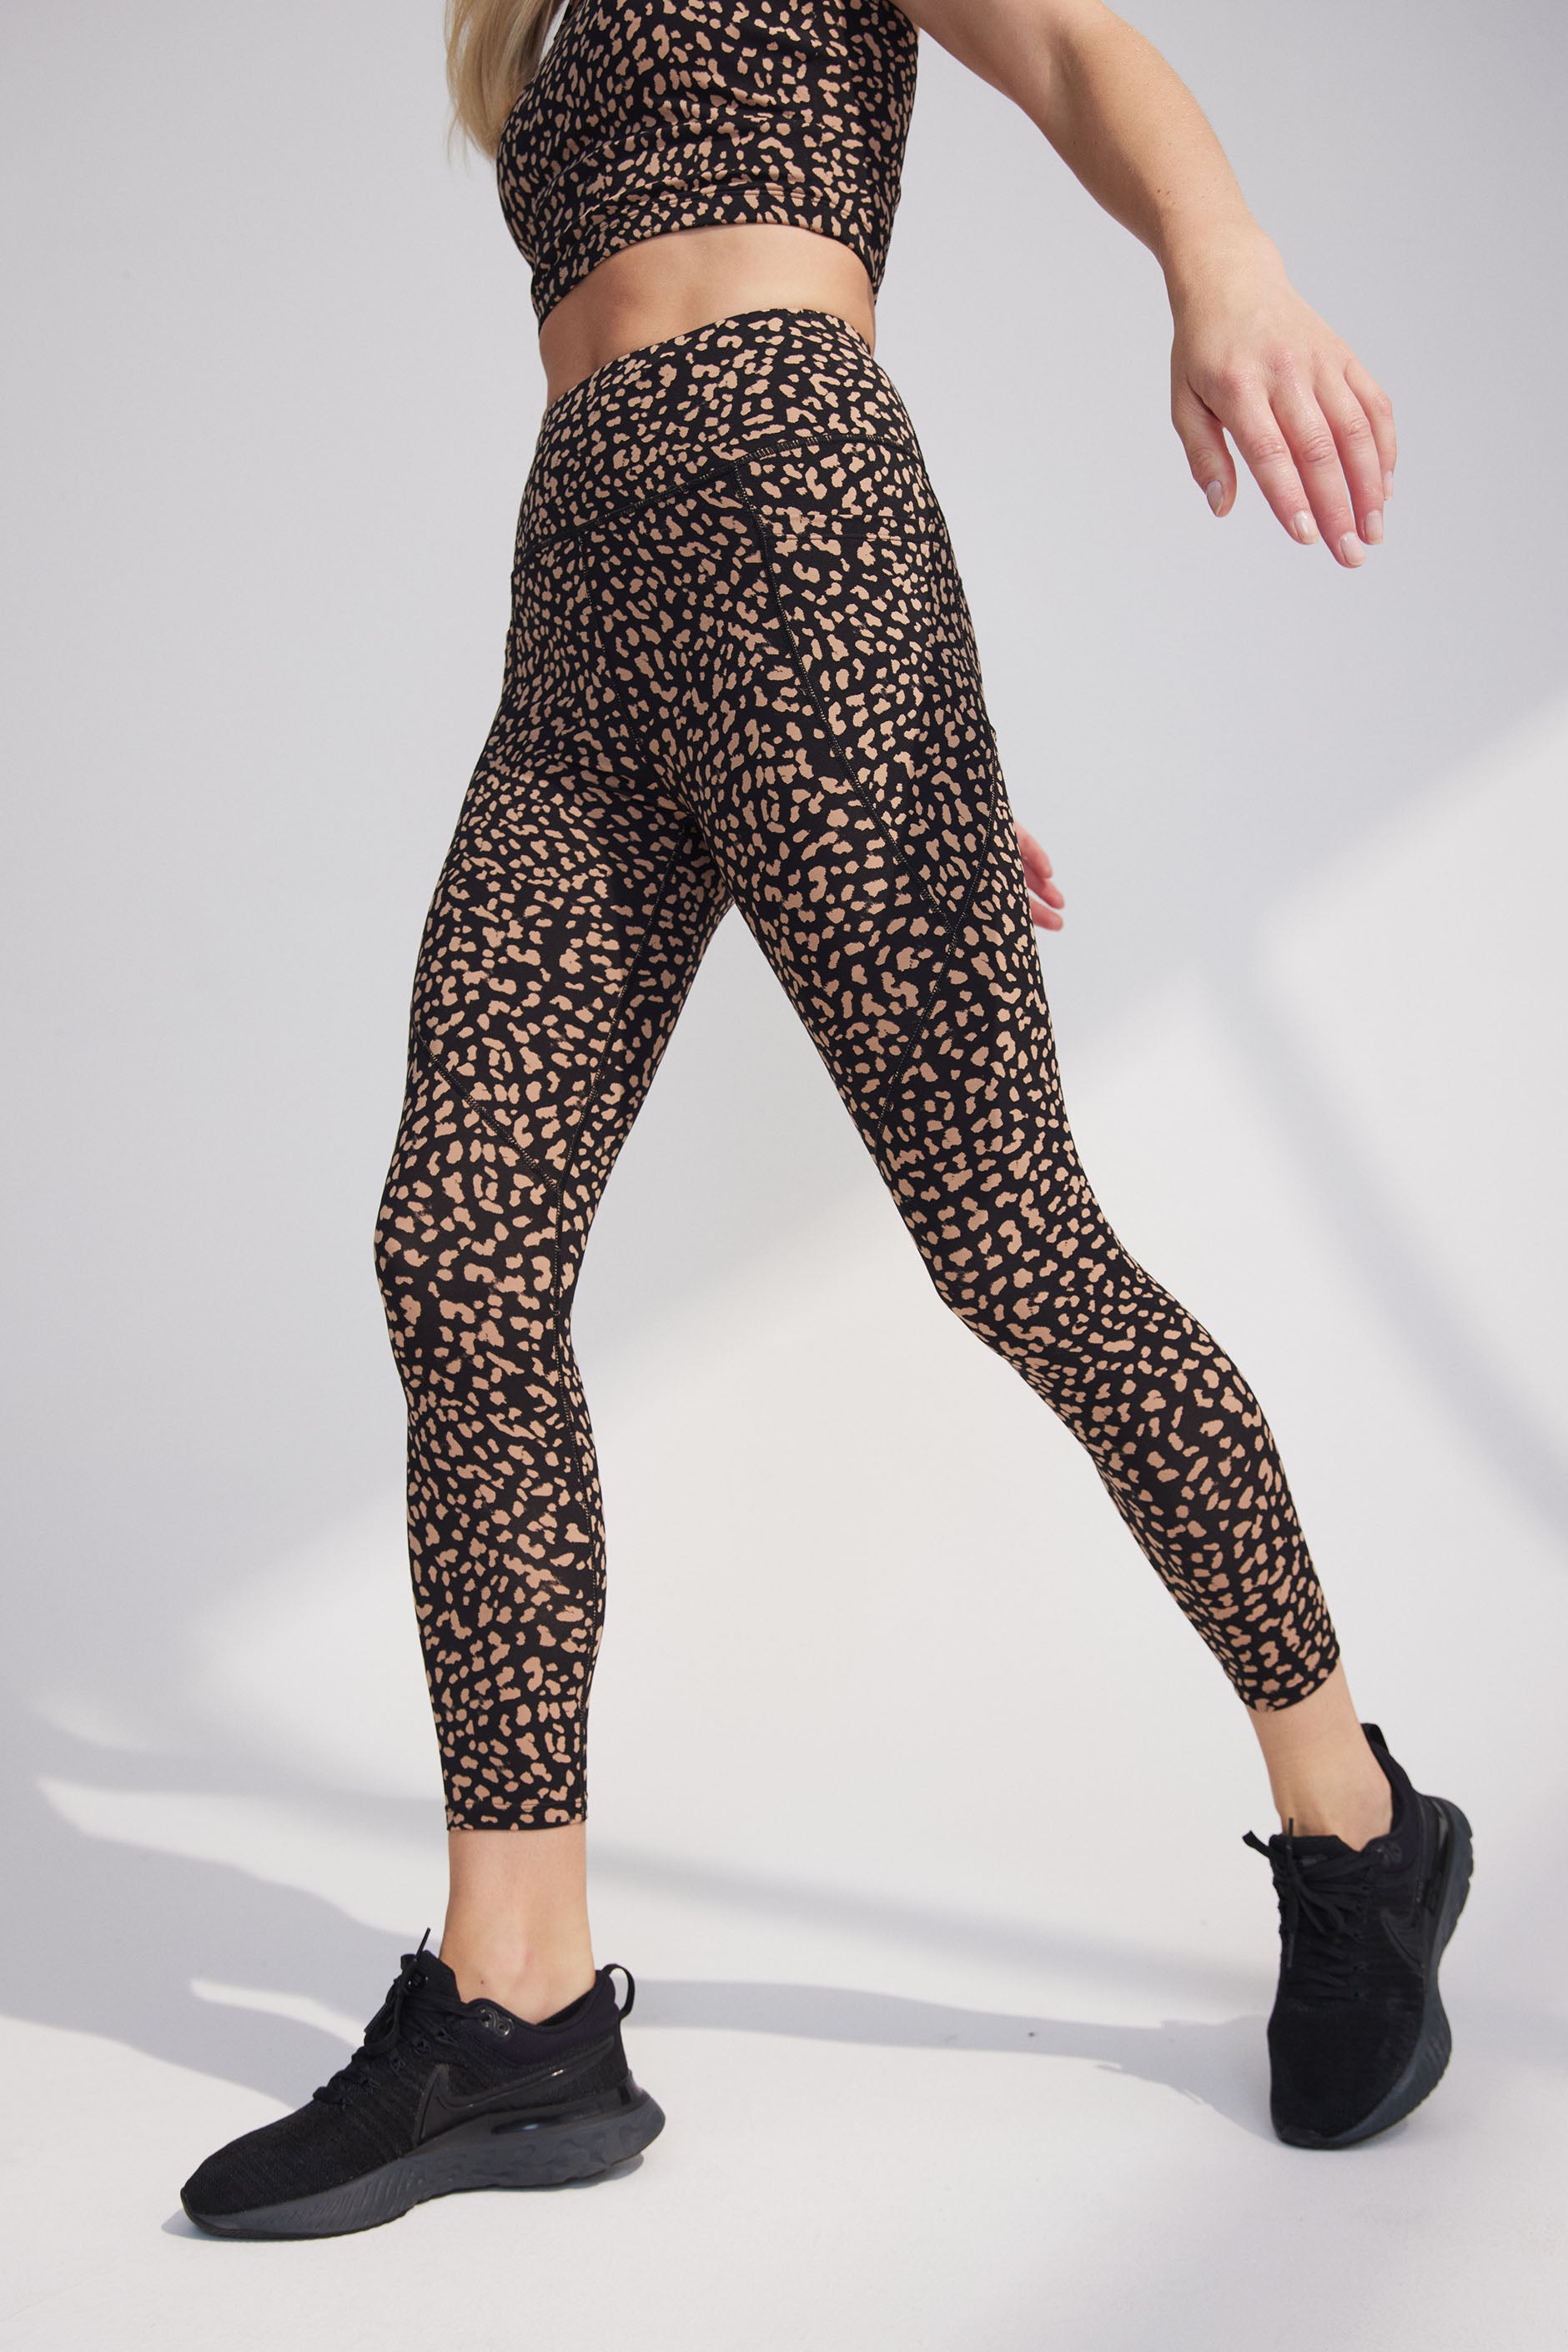 Leopard & Cheetah Leggings | Animal Prints | Evolve Fit Wear